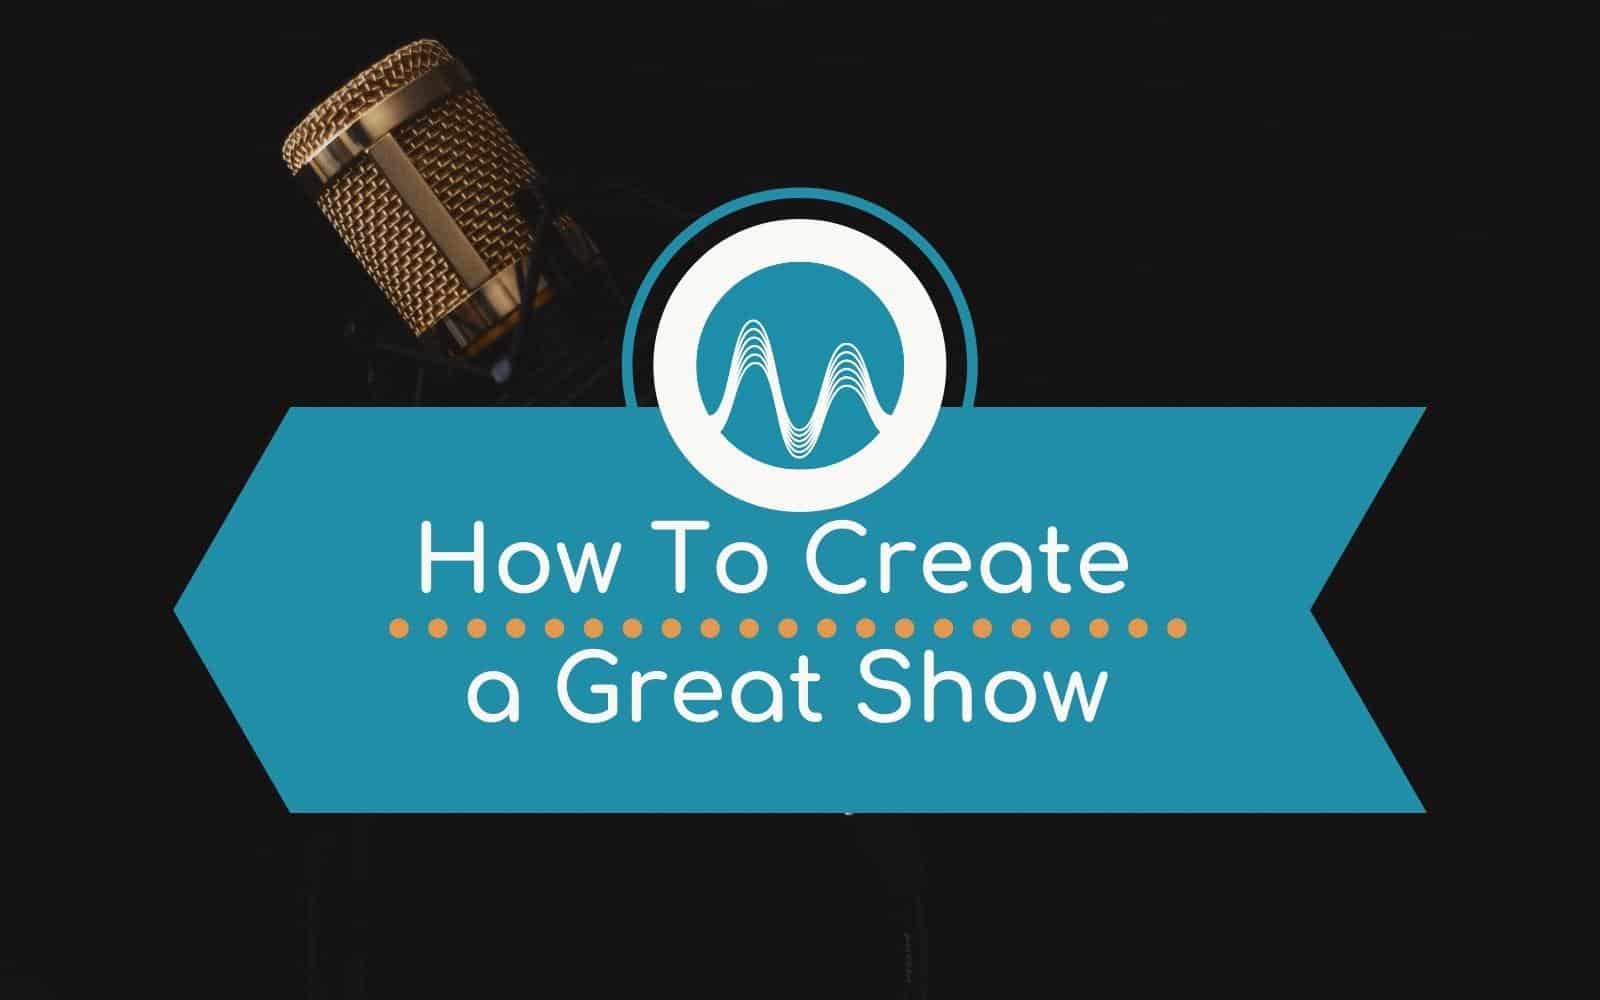 How To Create a Great Radio/Podcast Show General radio jingle Music Radio Creative